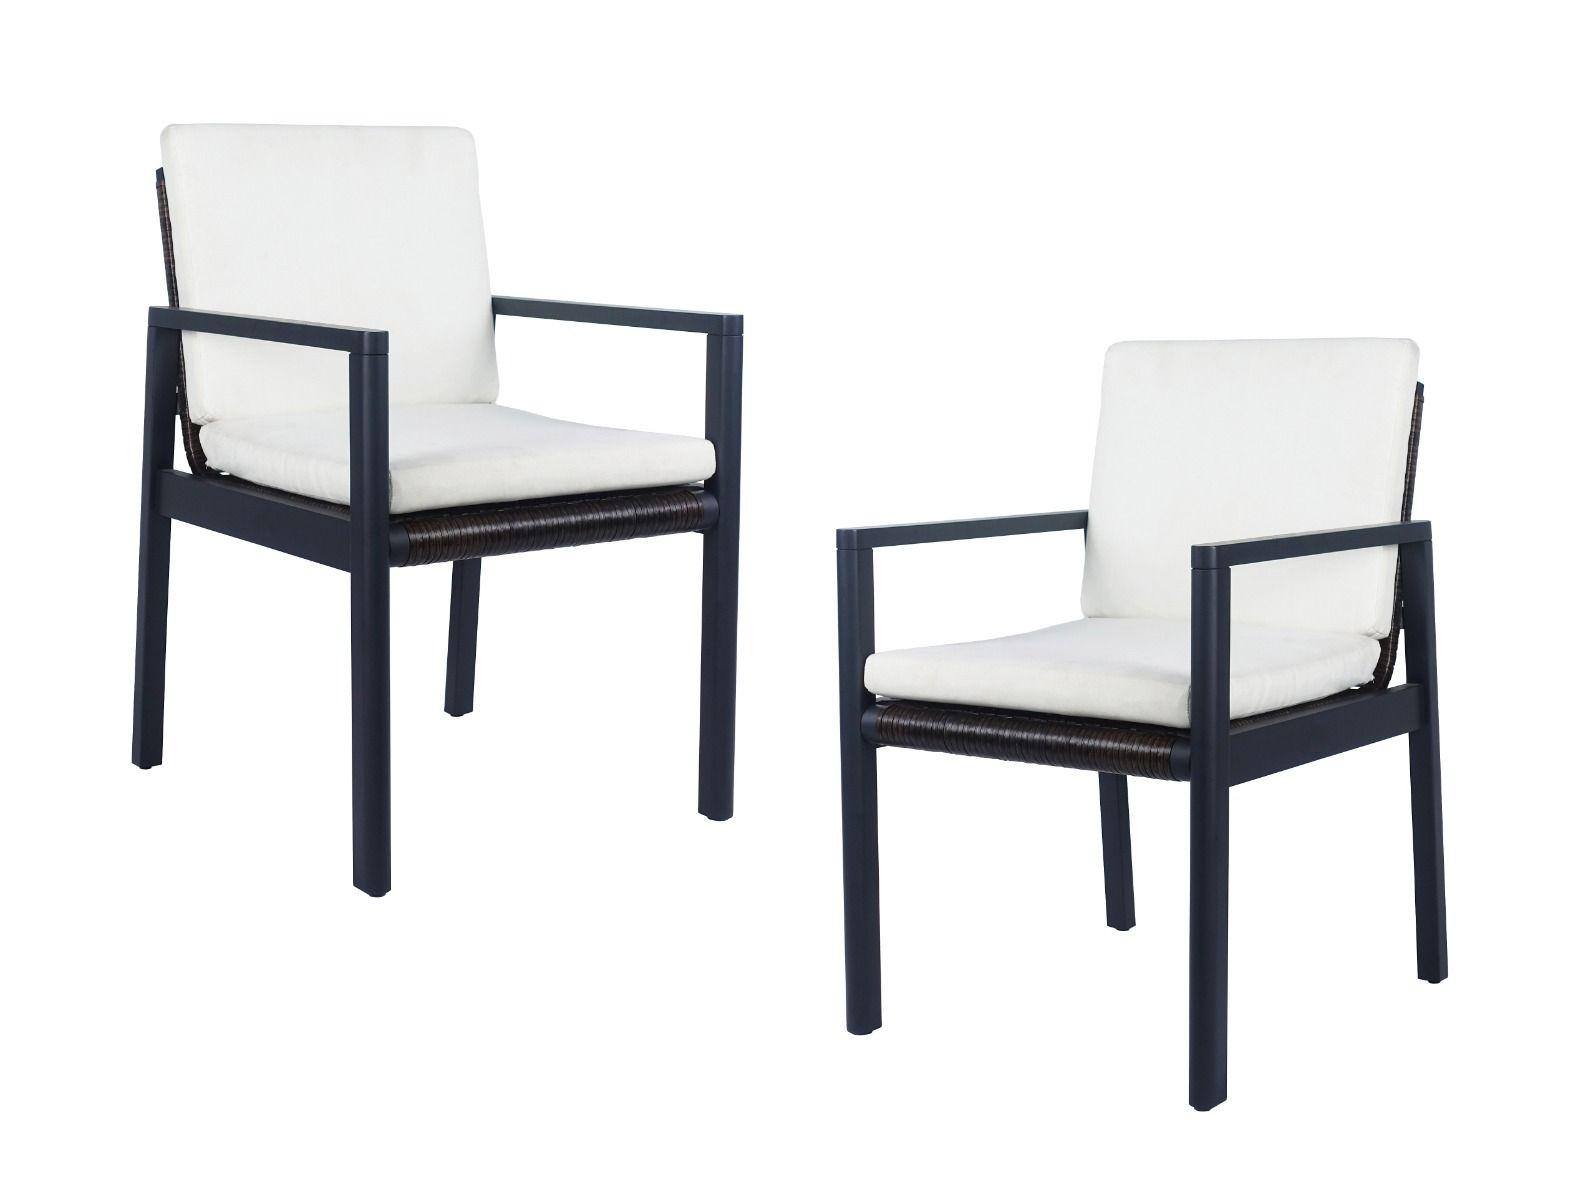 VIG Furniture Renava Cuba Outdoor Dining Chair Set 2PCS VGPD-296.57-DT-SET-2PCS Outdoor Dining Chair Set